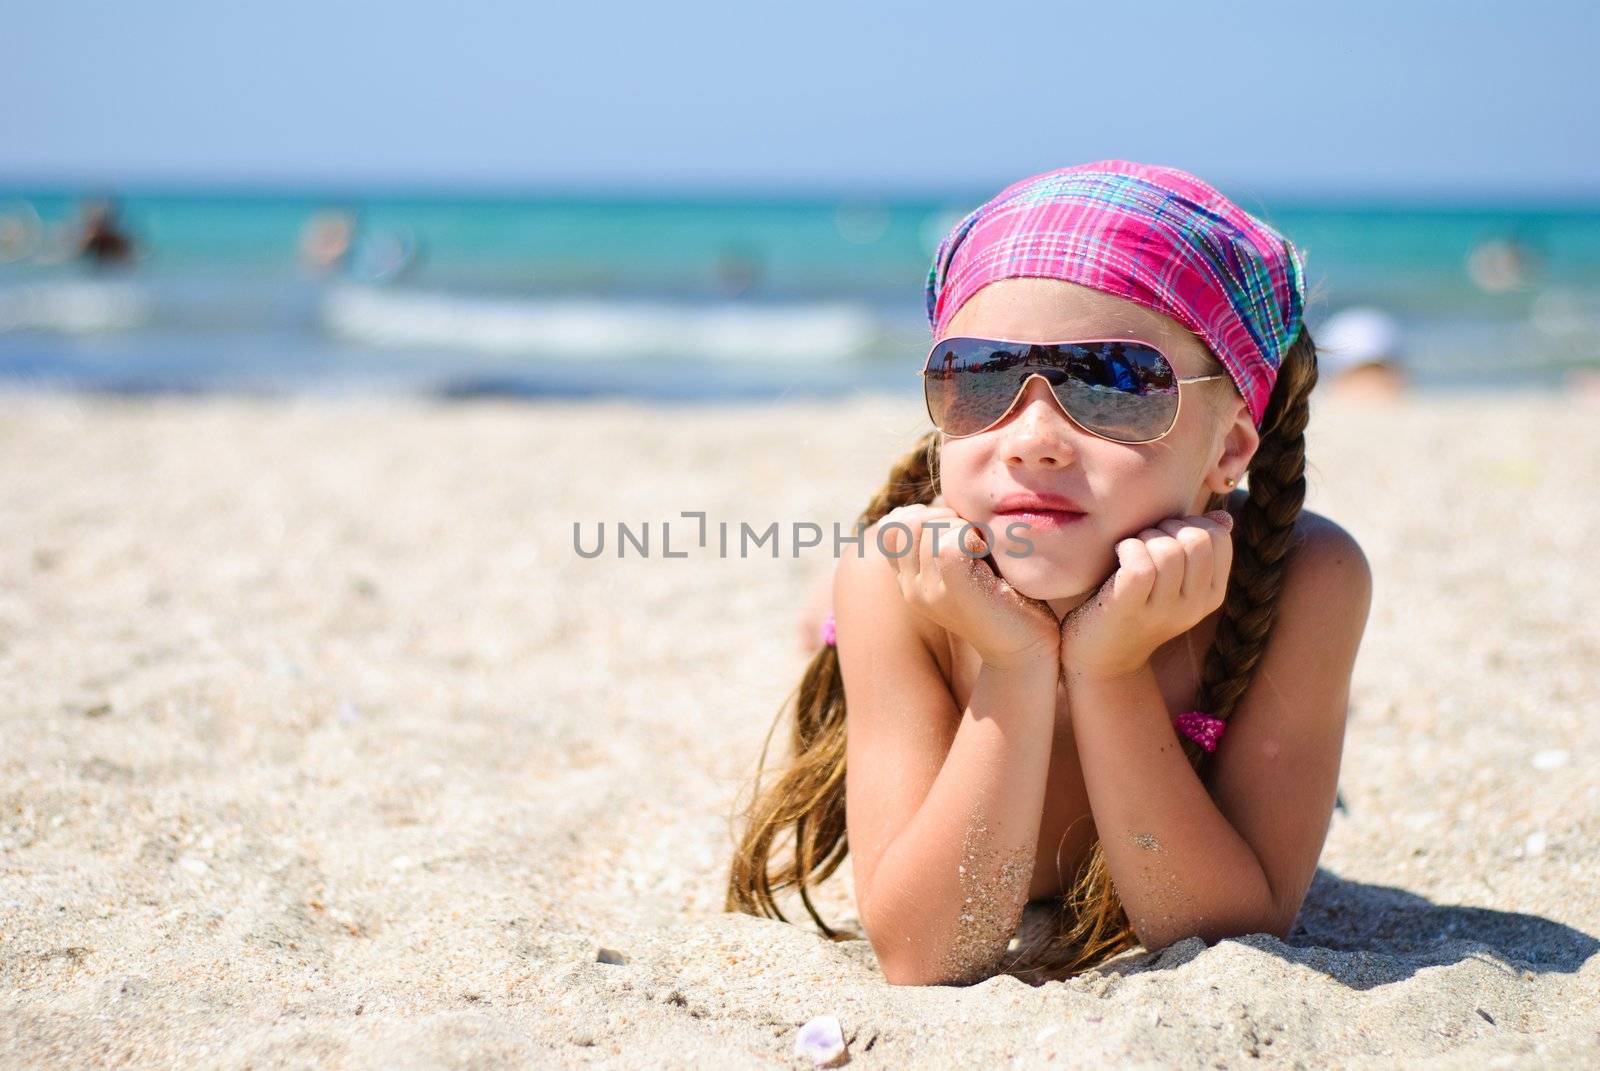 Little girl on the beach by olegator1977